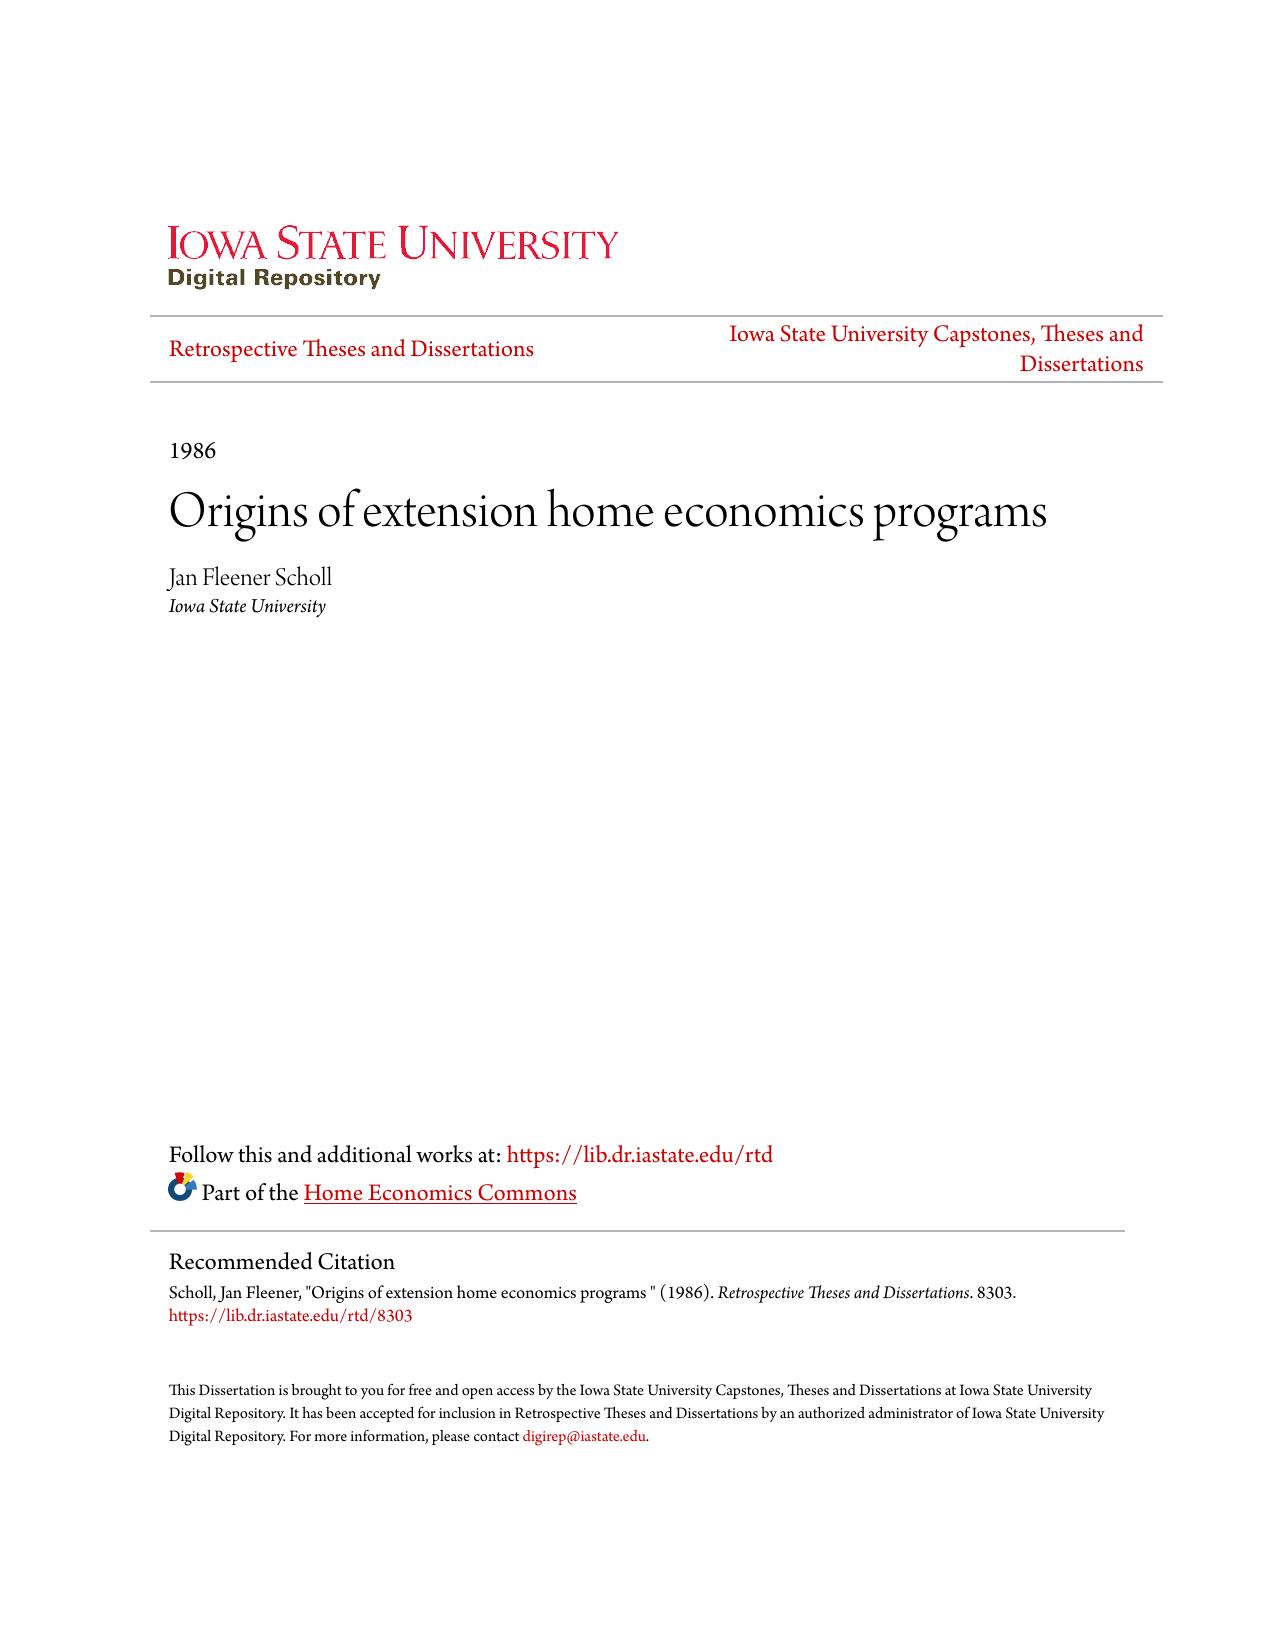 Origins of extension home economics programs